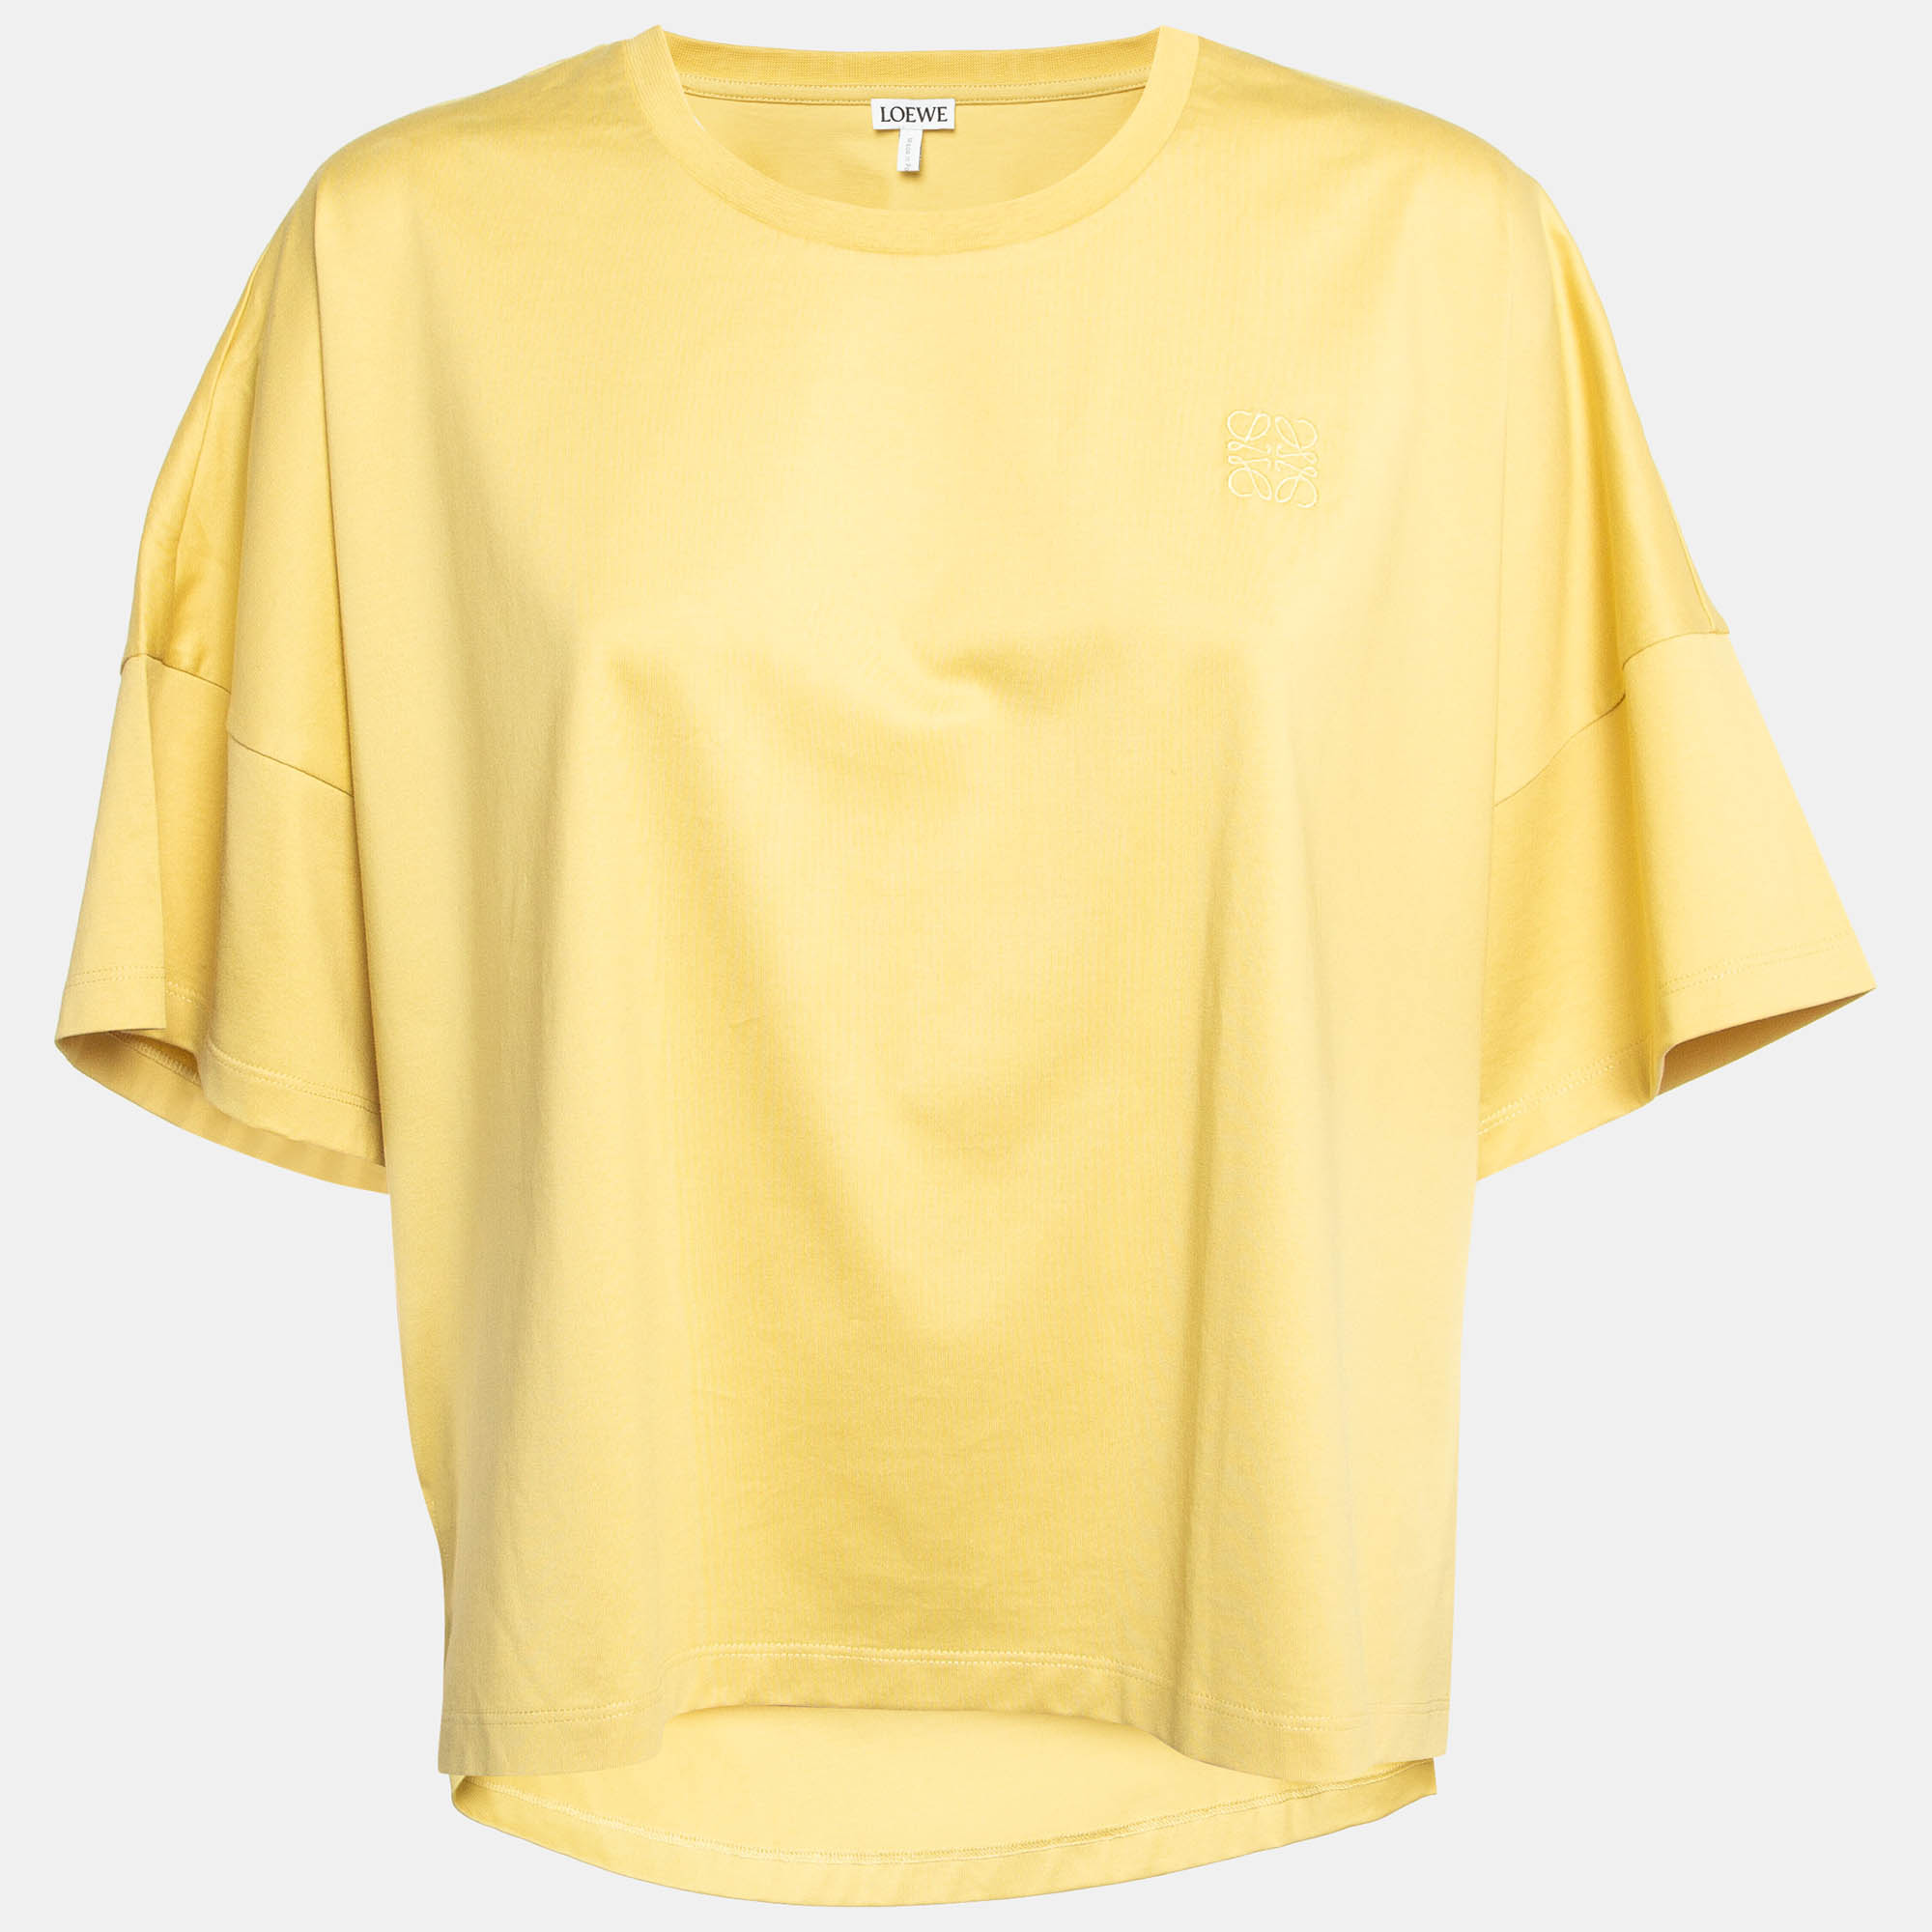 Loewe yellow logo embroidered cotton t-shirt m